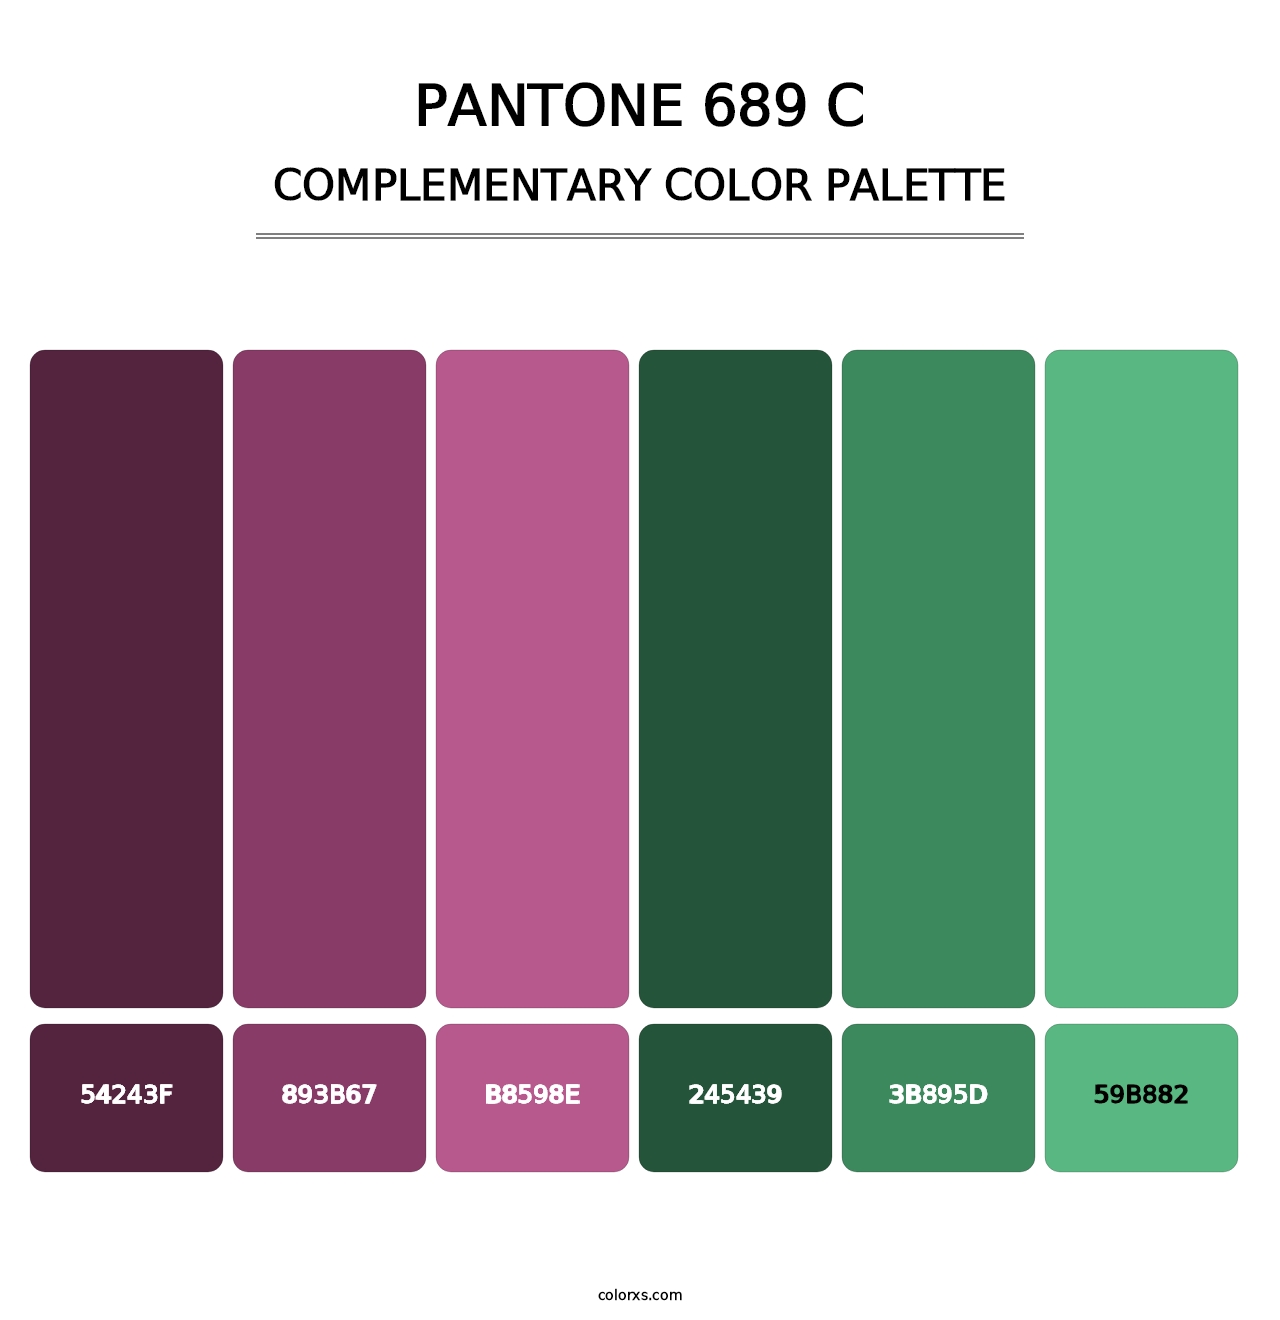 PANTONE 689 C - Complementary Color Palette